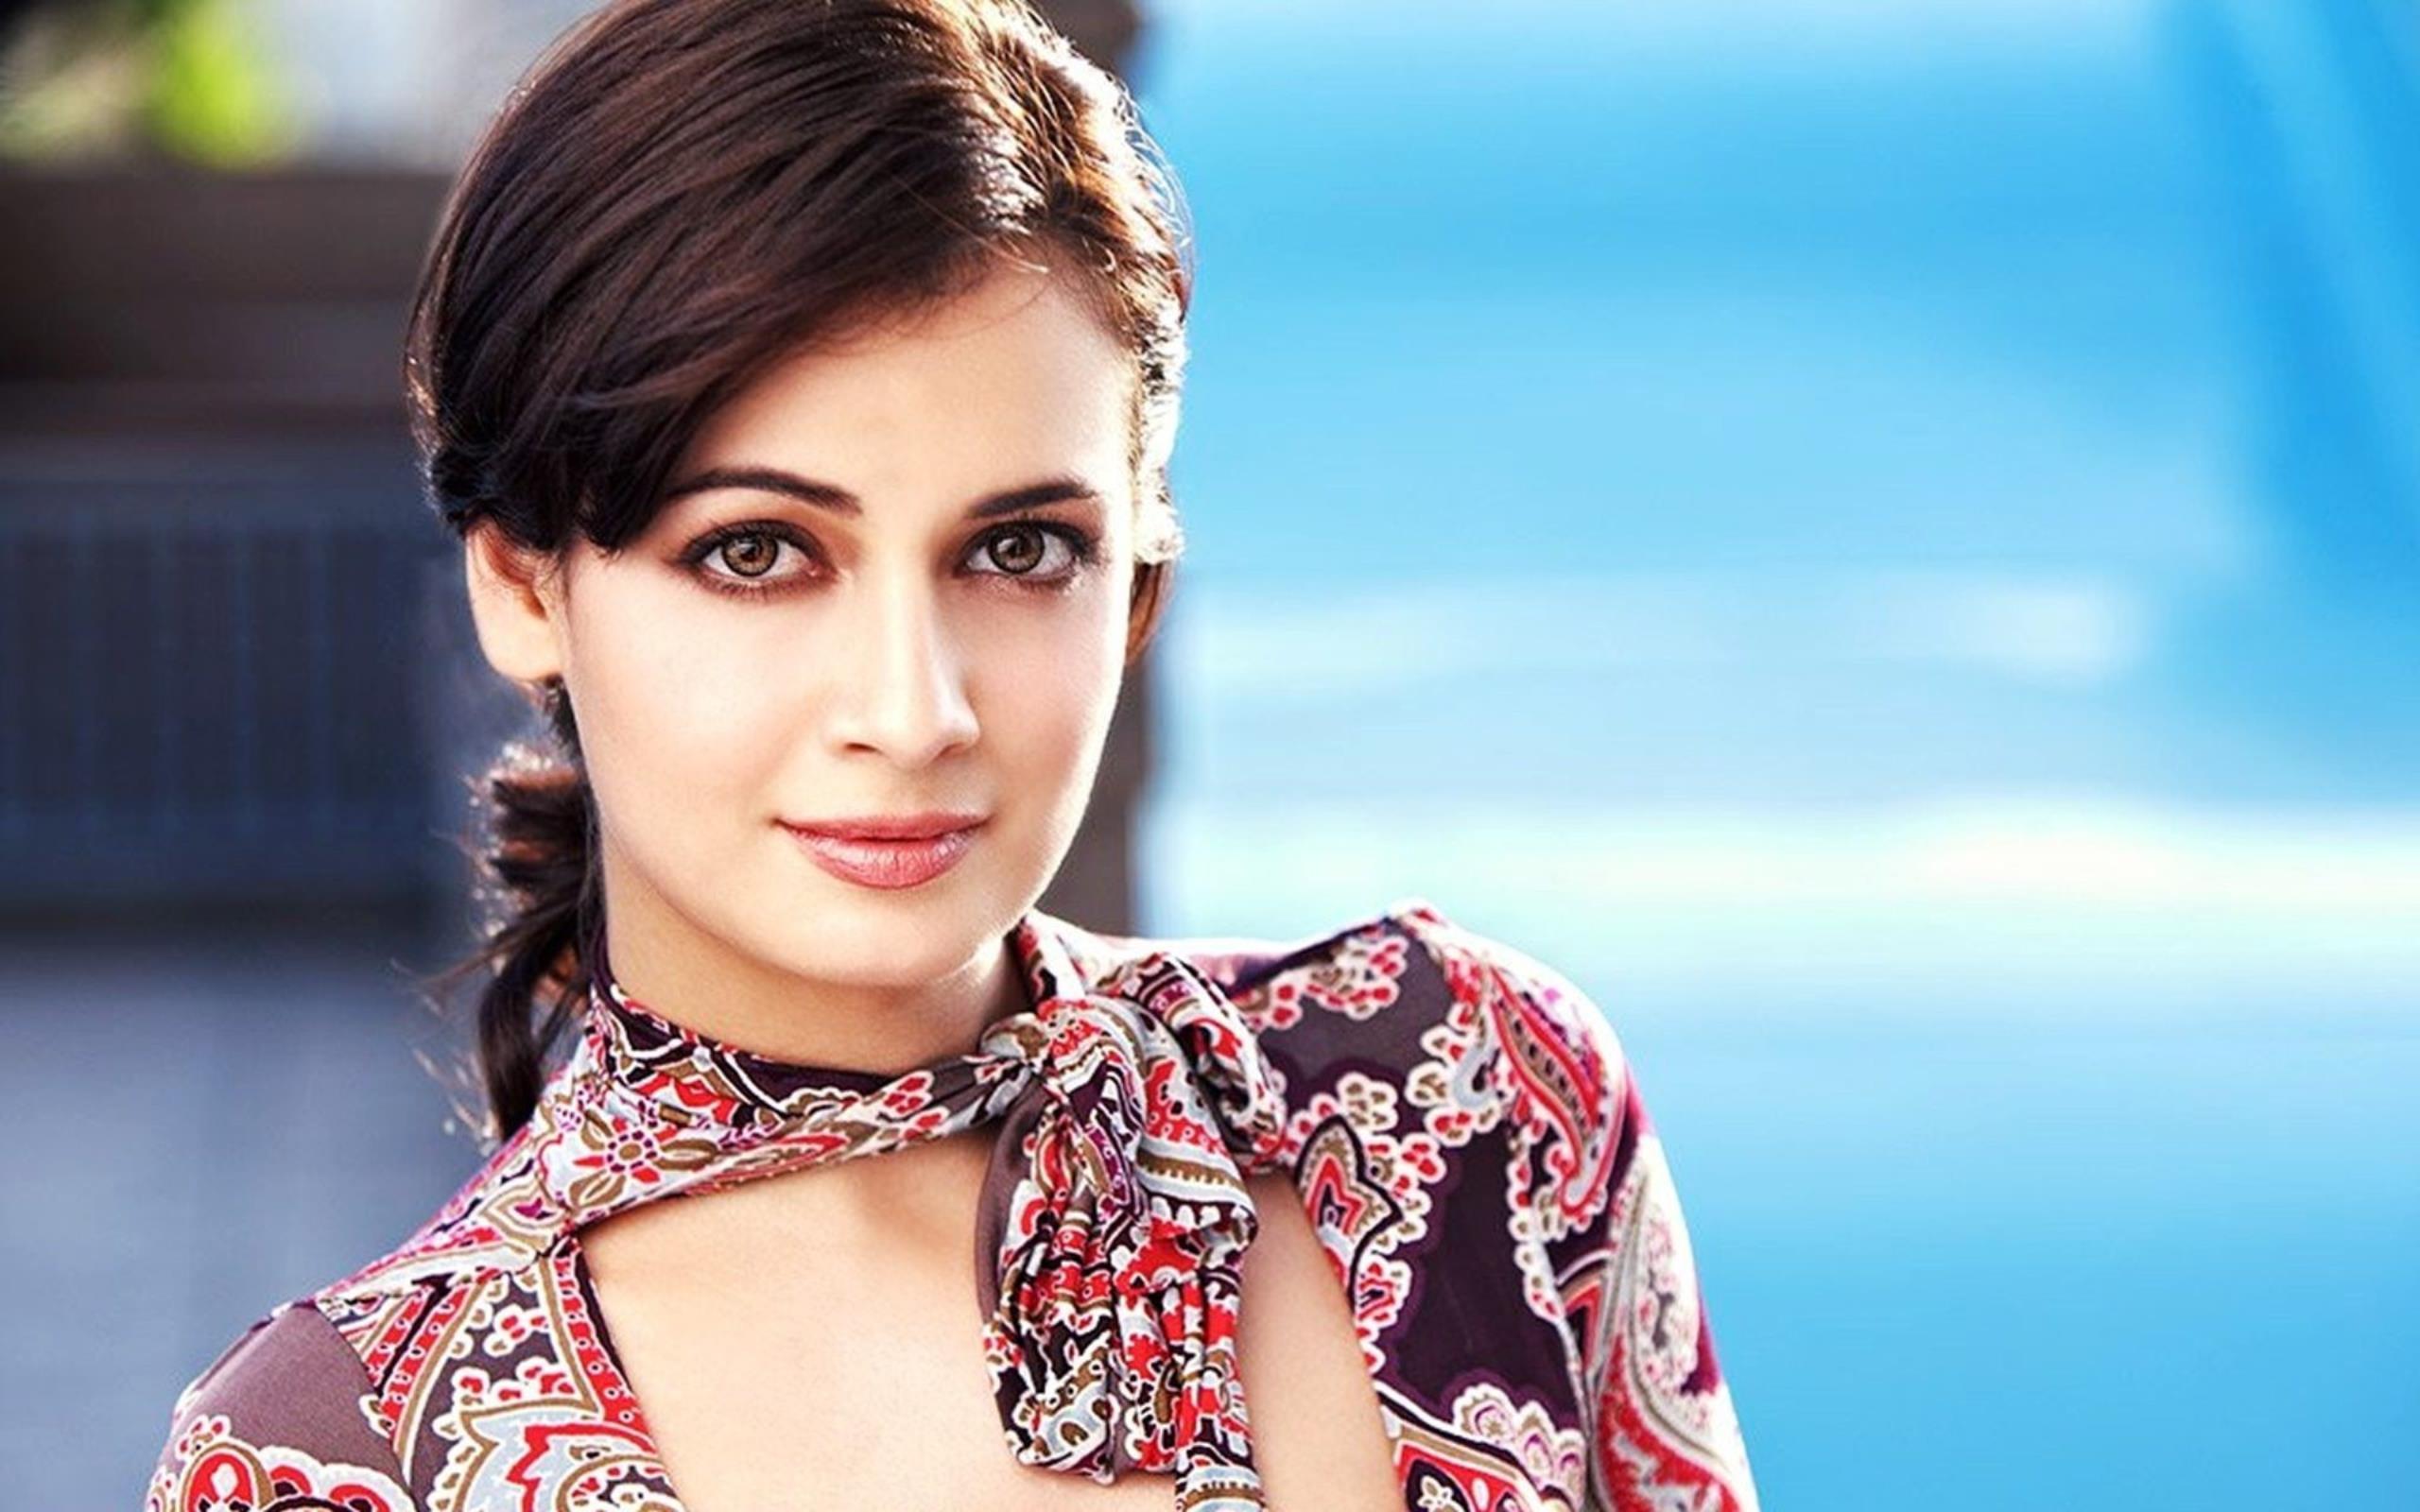 Bollywood Actress HD 1080p Wallpapers - Wallpaper Cave